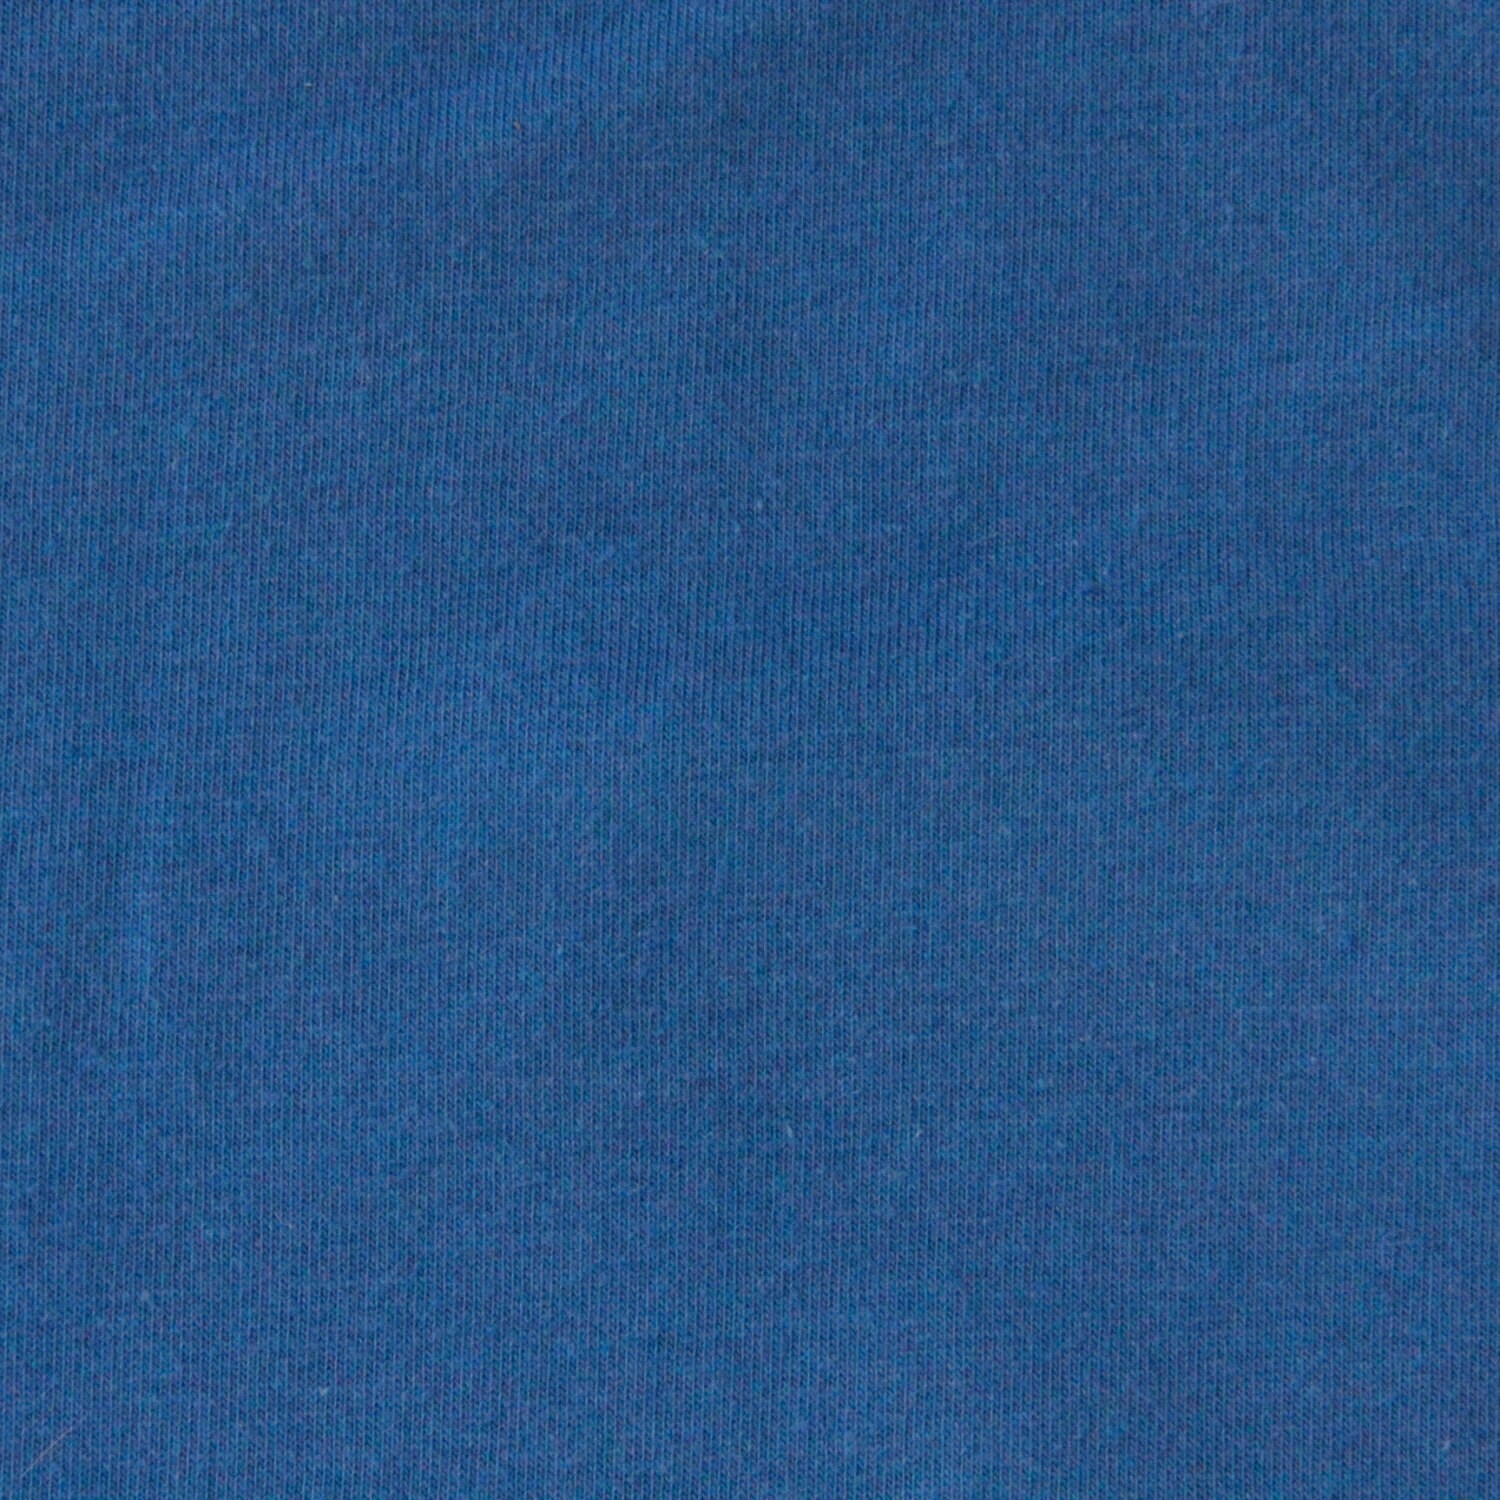 SALE Knit fabric royal blue knit fabric cotton knit